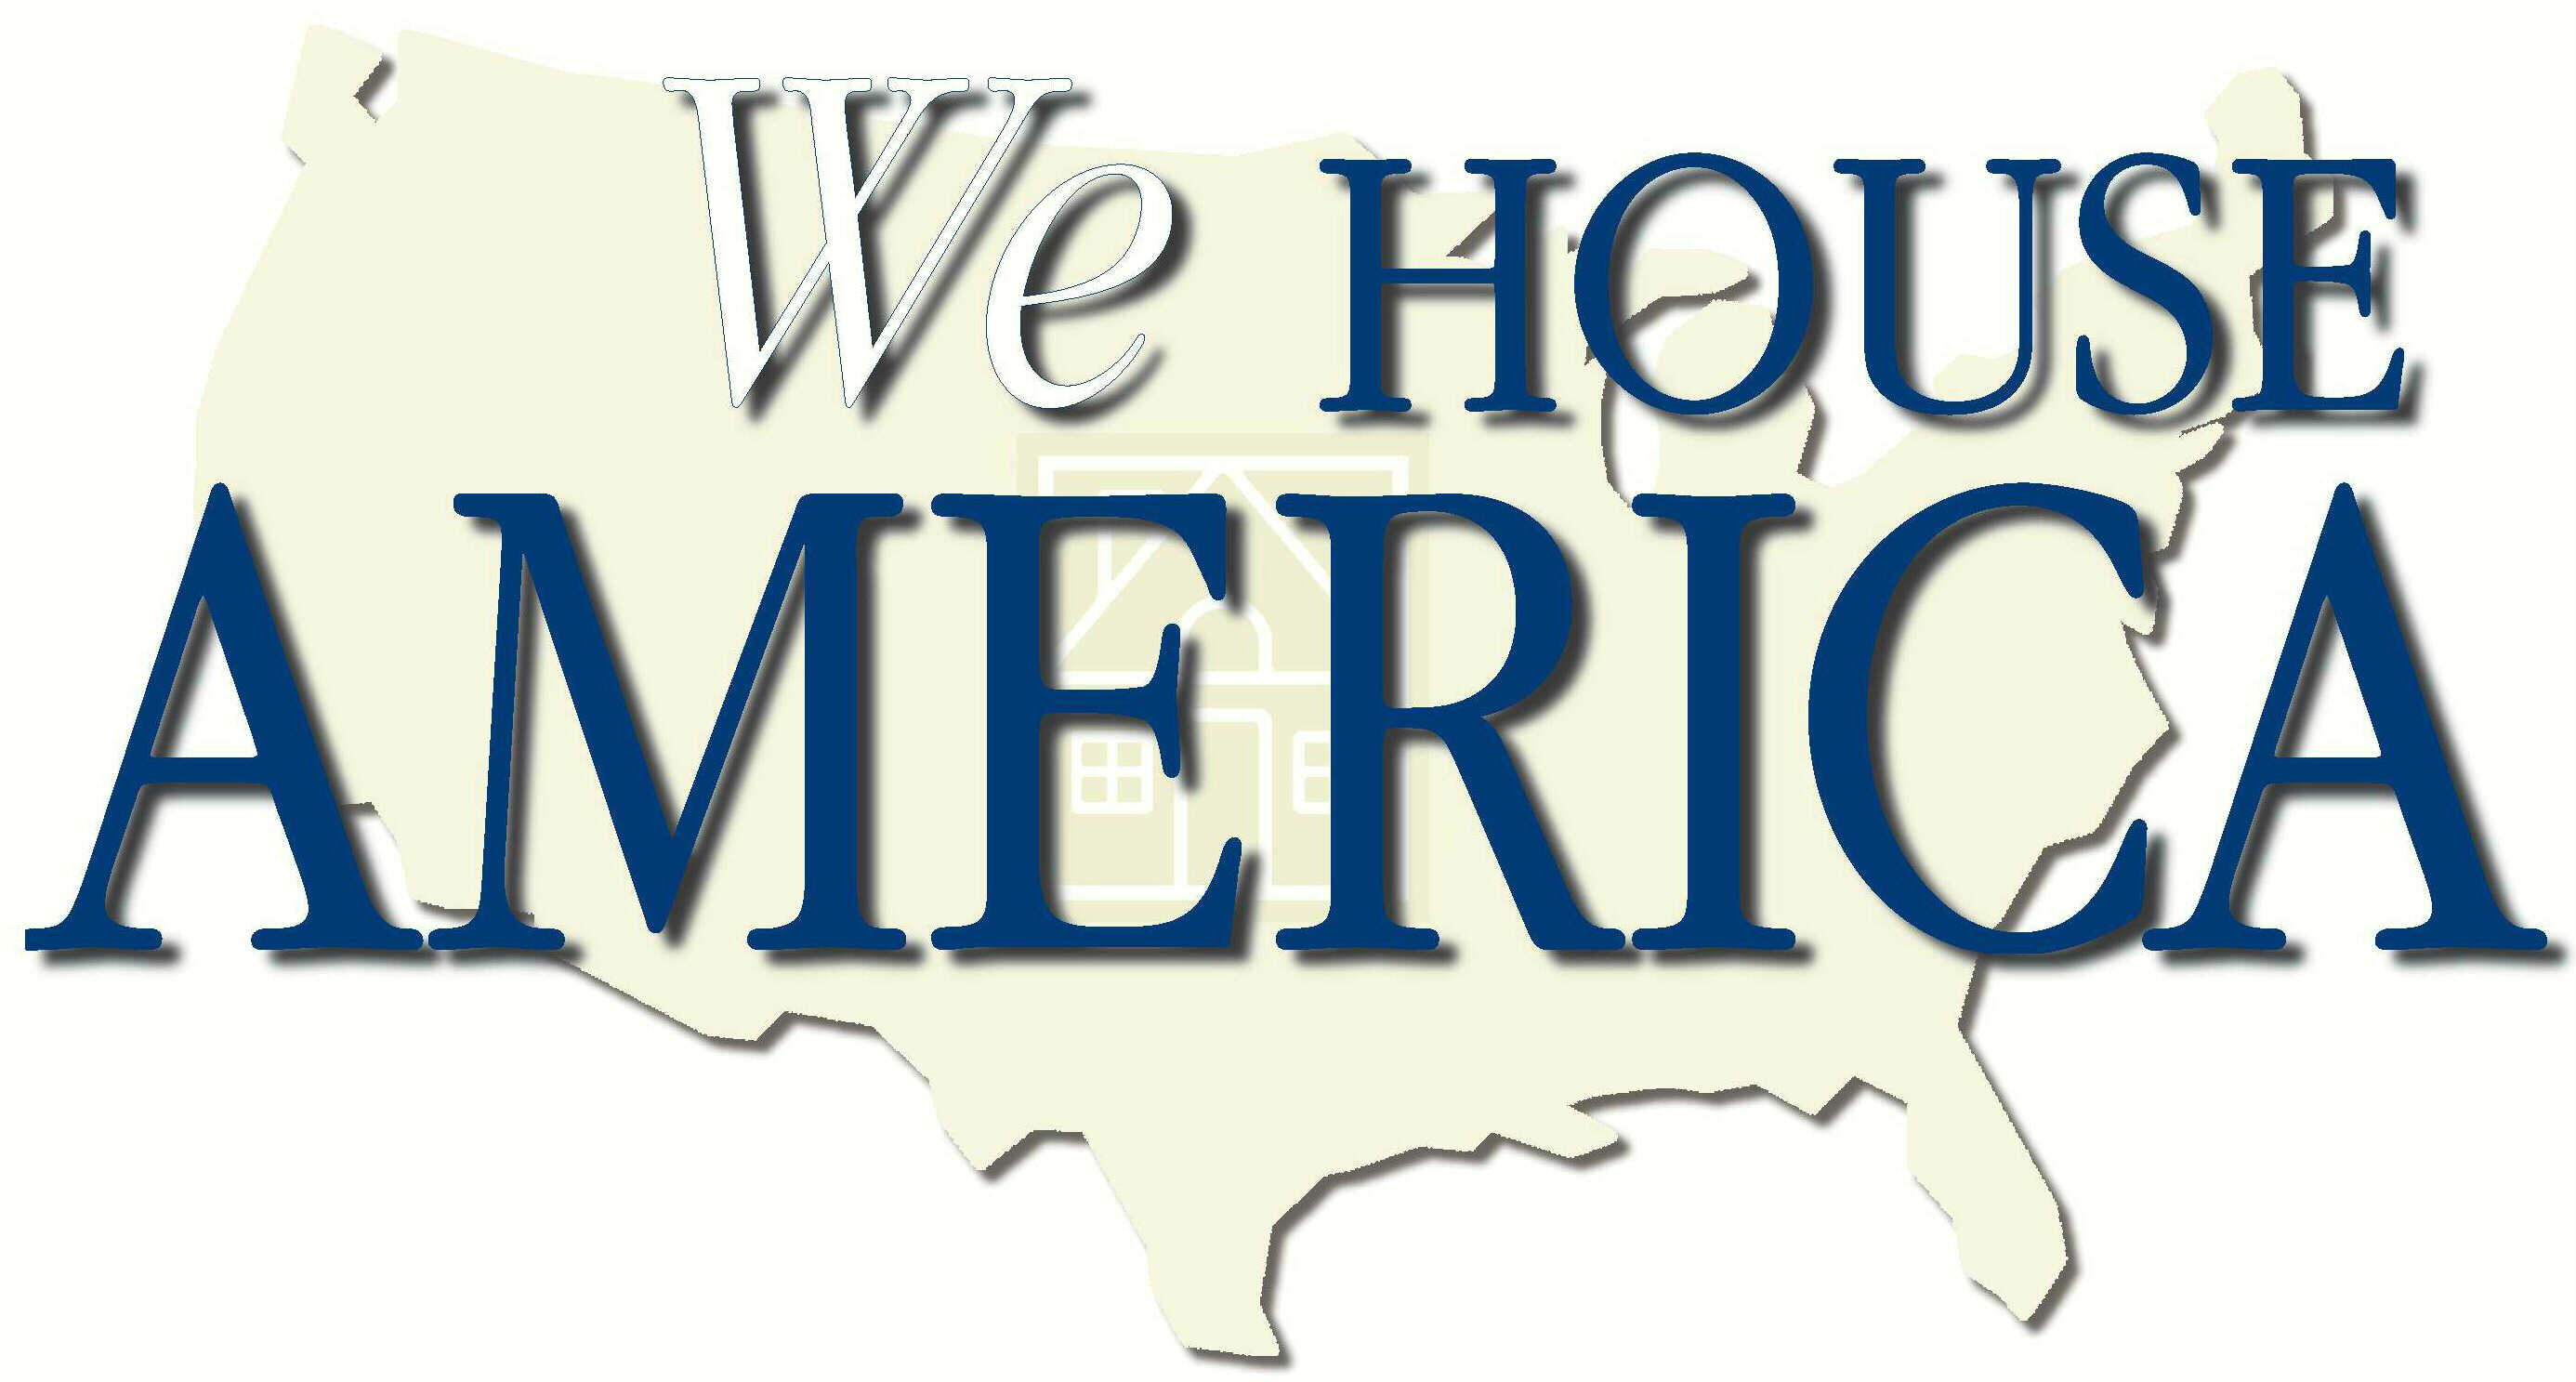  WE HOUSE AMERICA